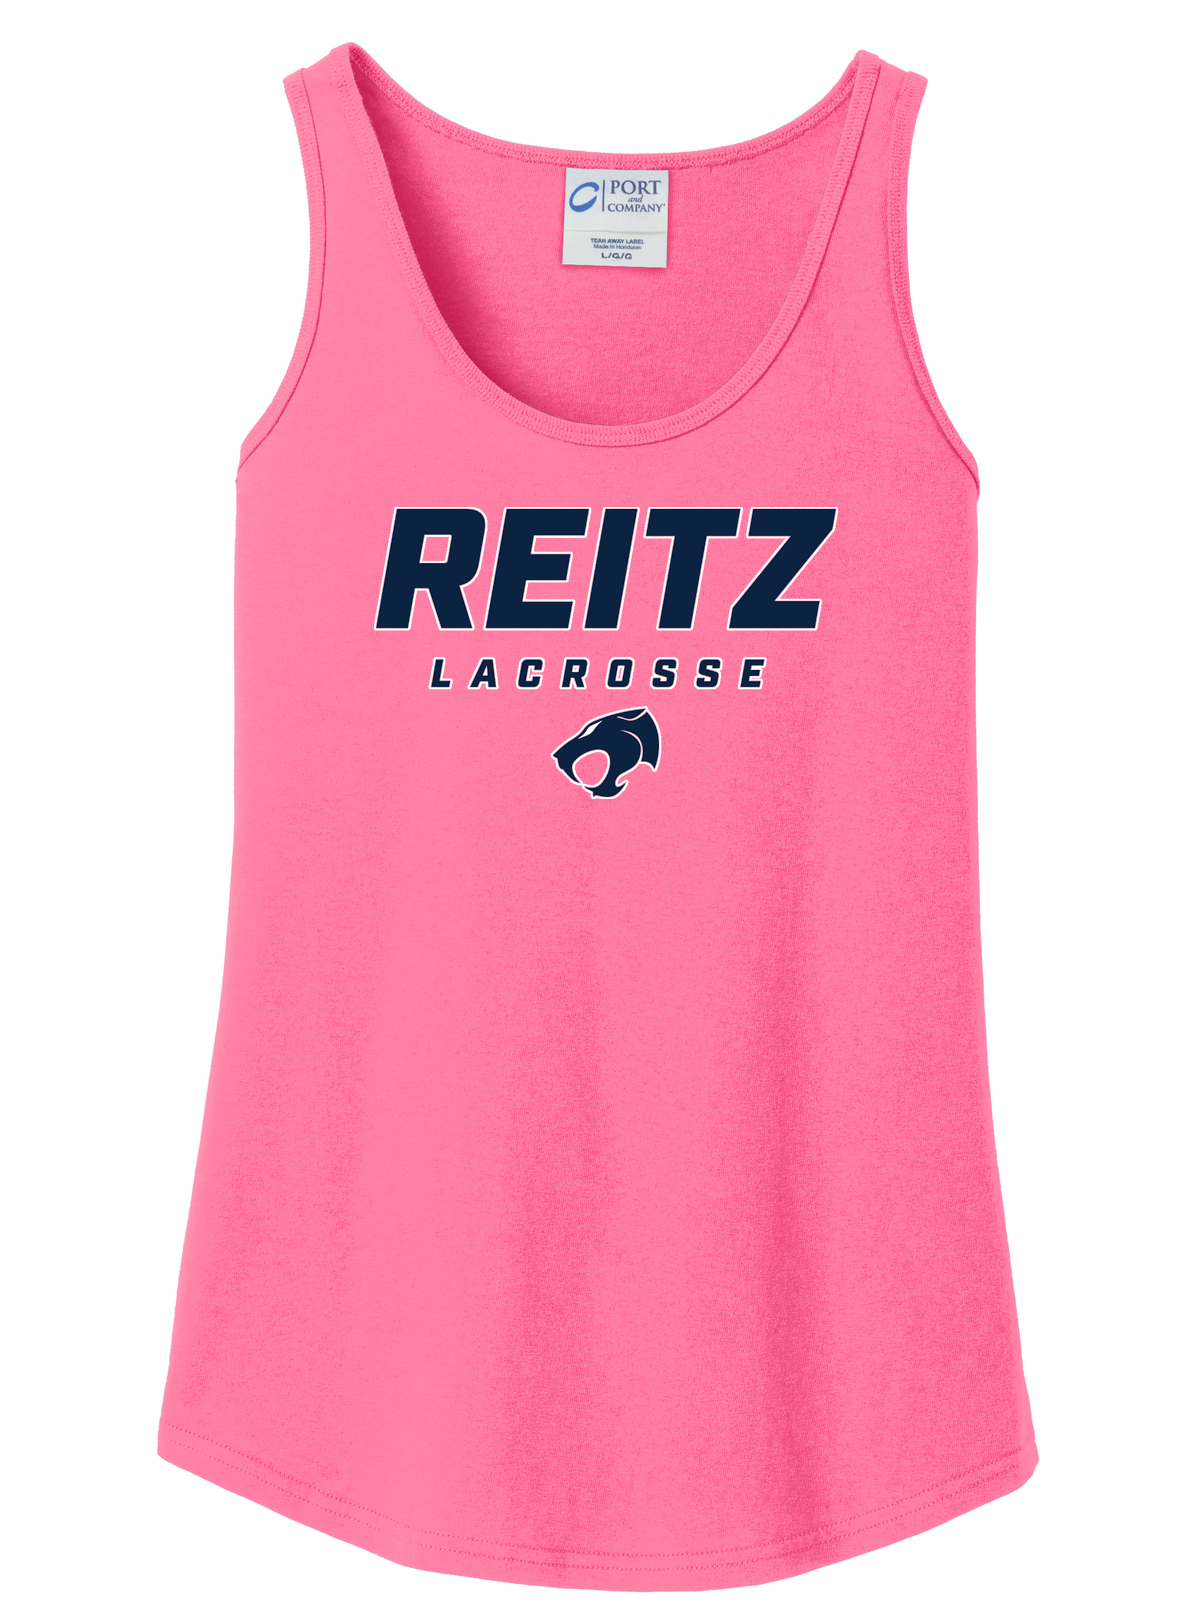 Reitz Lacrosse Women's Neon Pink Tank Top